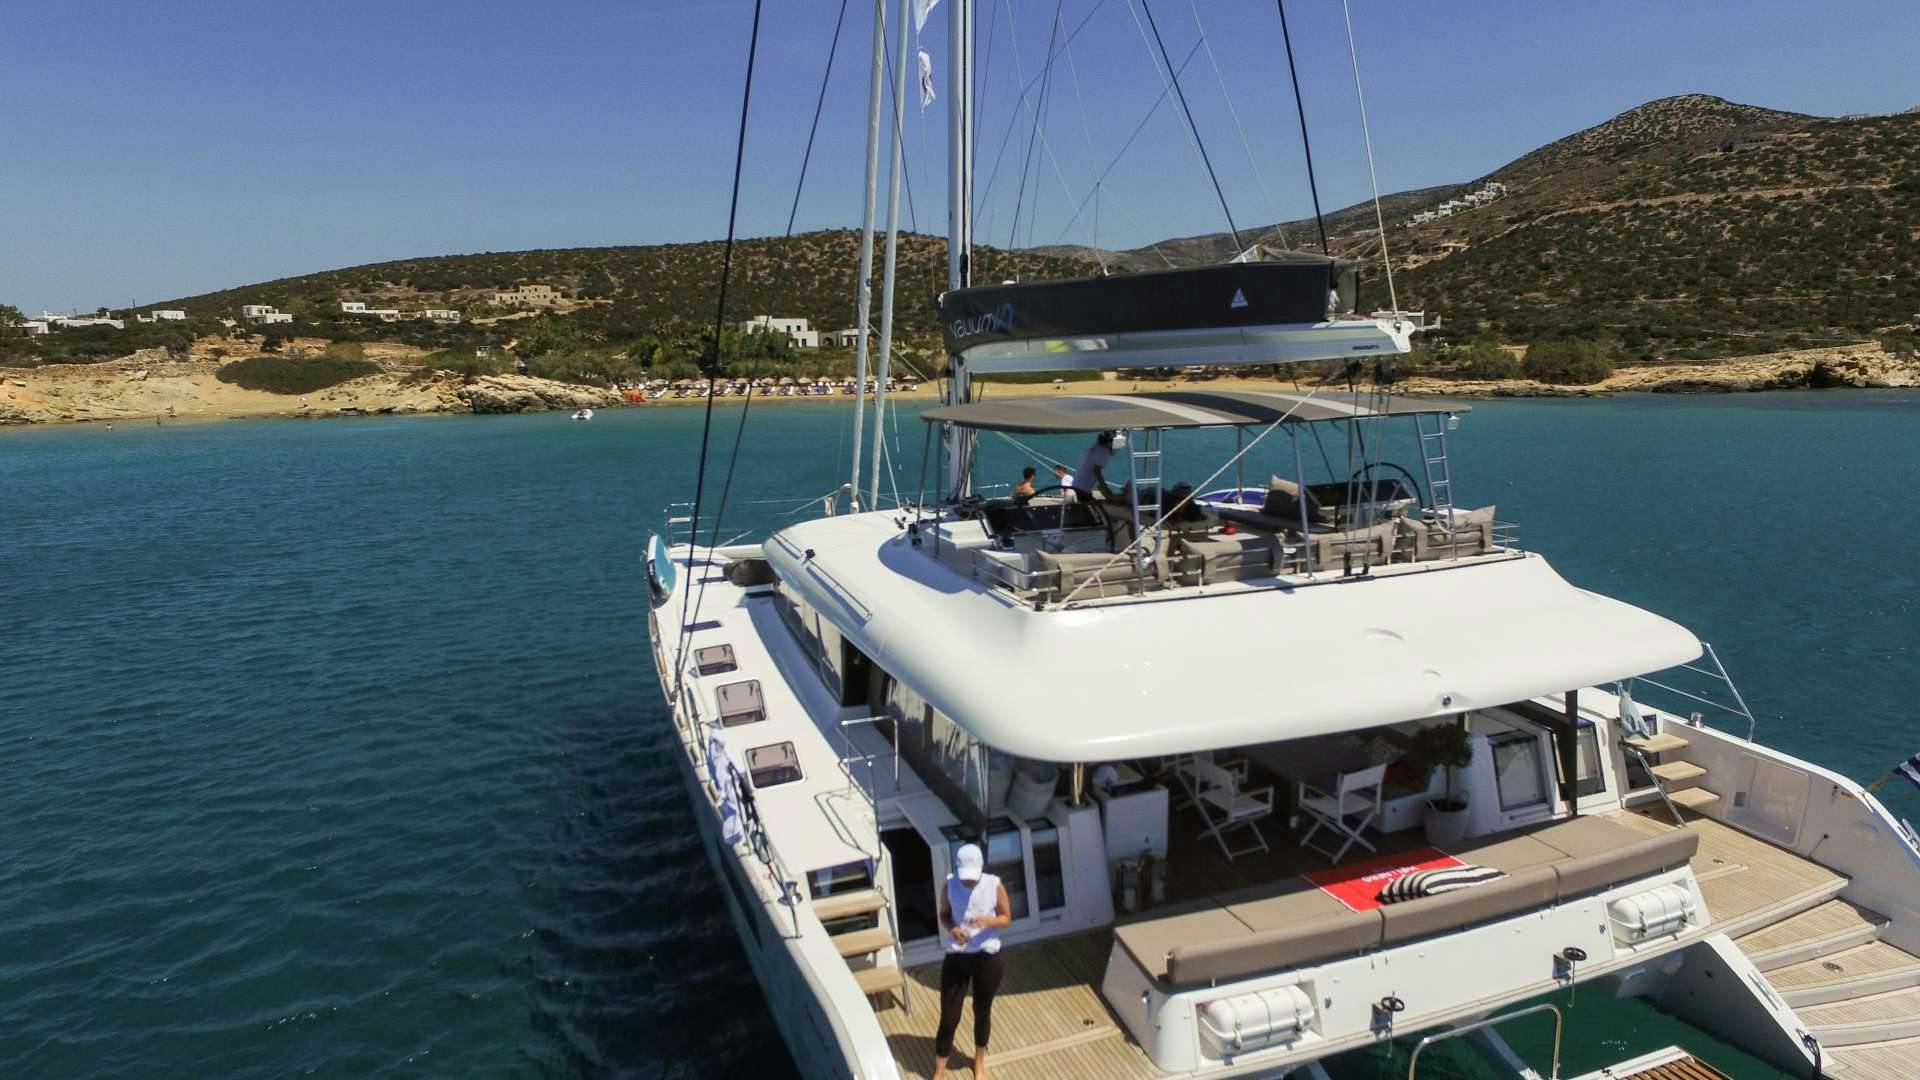 valium62 - Yacht Charter Sami & Boat hire in Greece 1